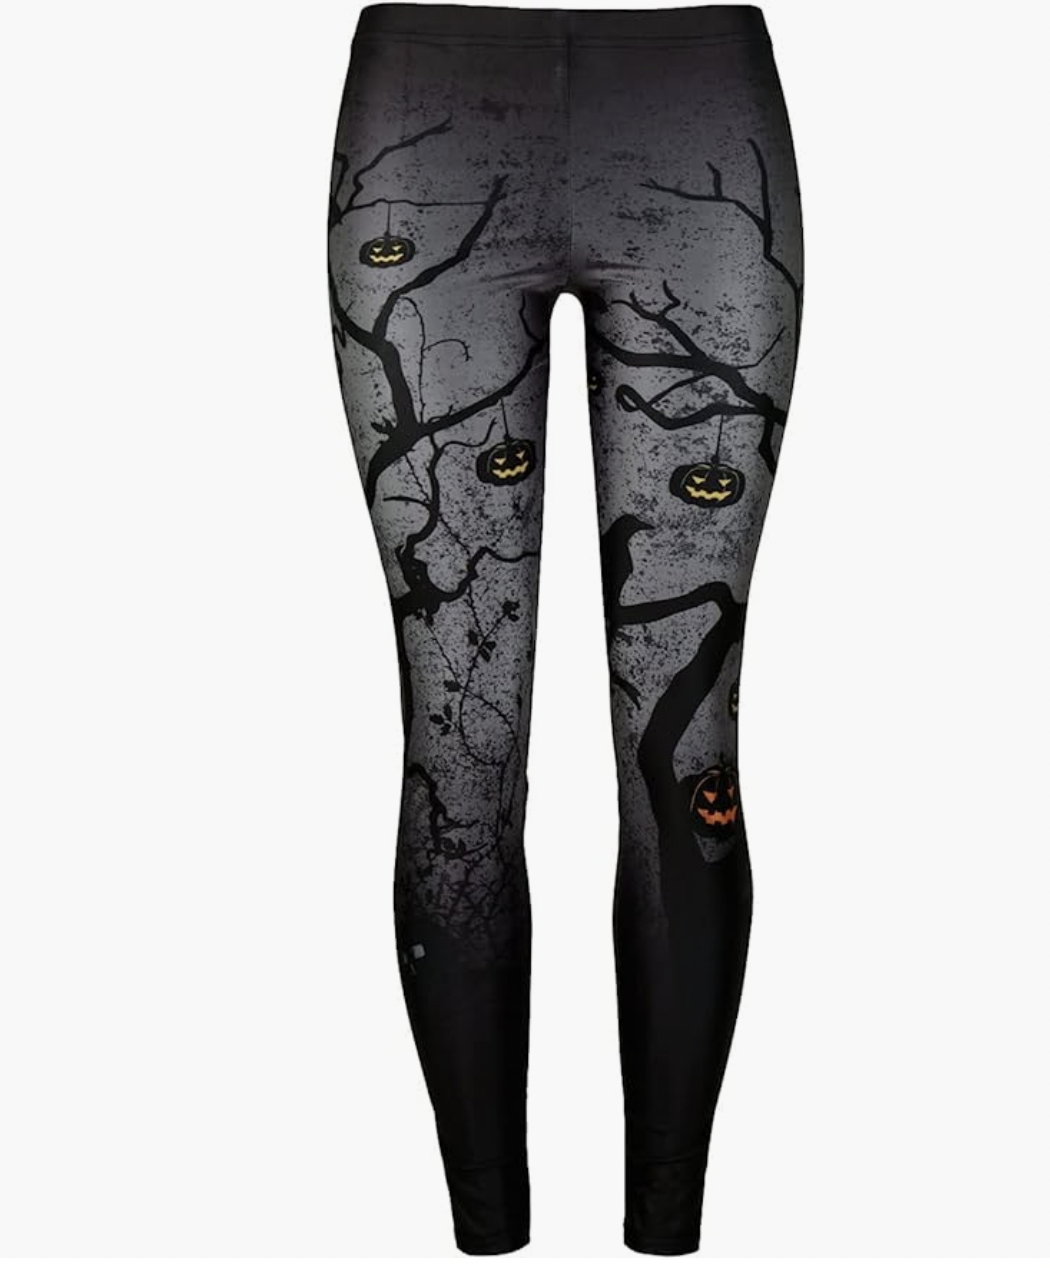 Spooky Season Leggings